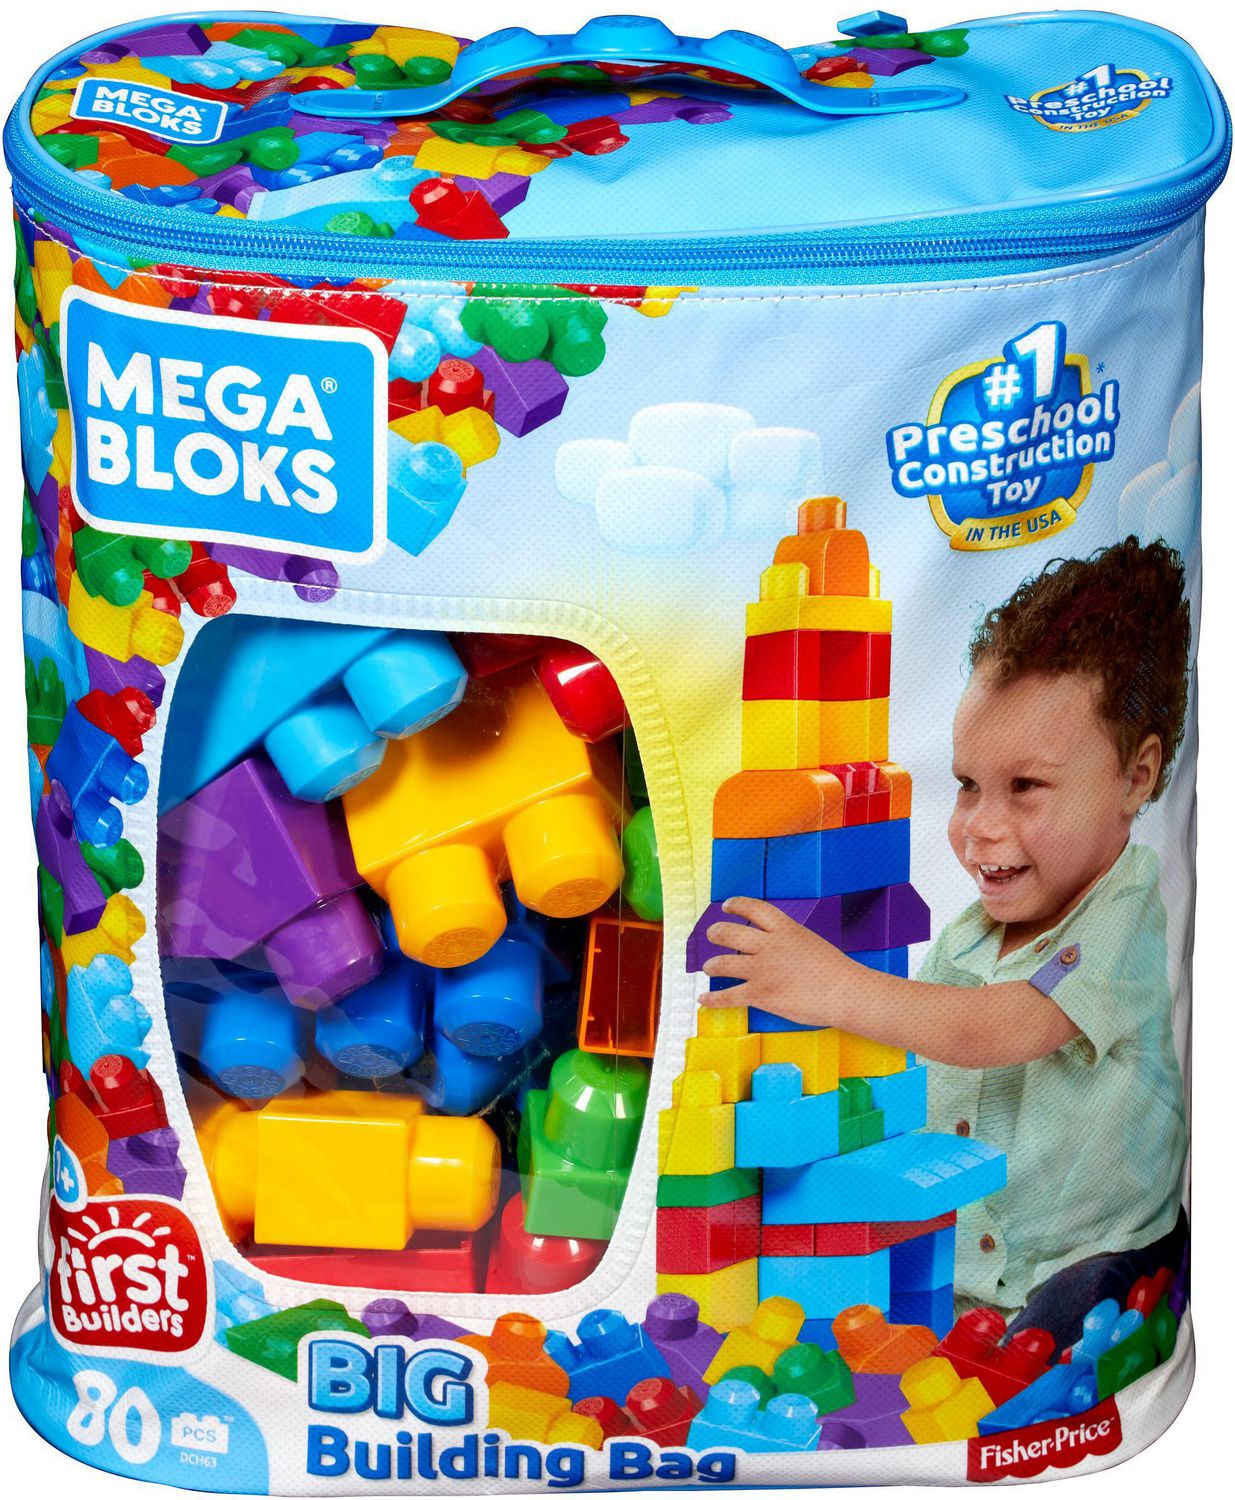 Mega Bloks DCH63 Big Building Bag 80 Piece for sale online 